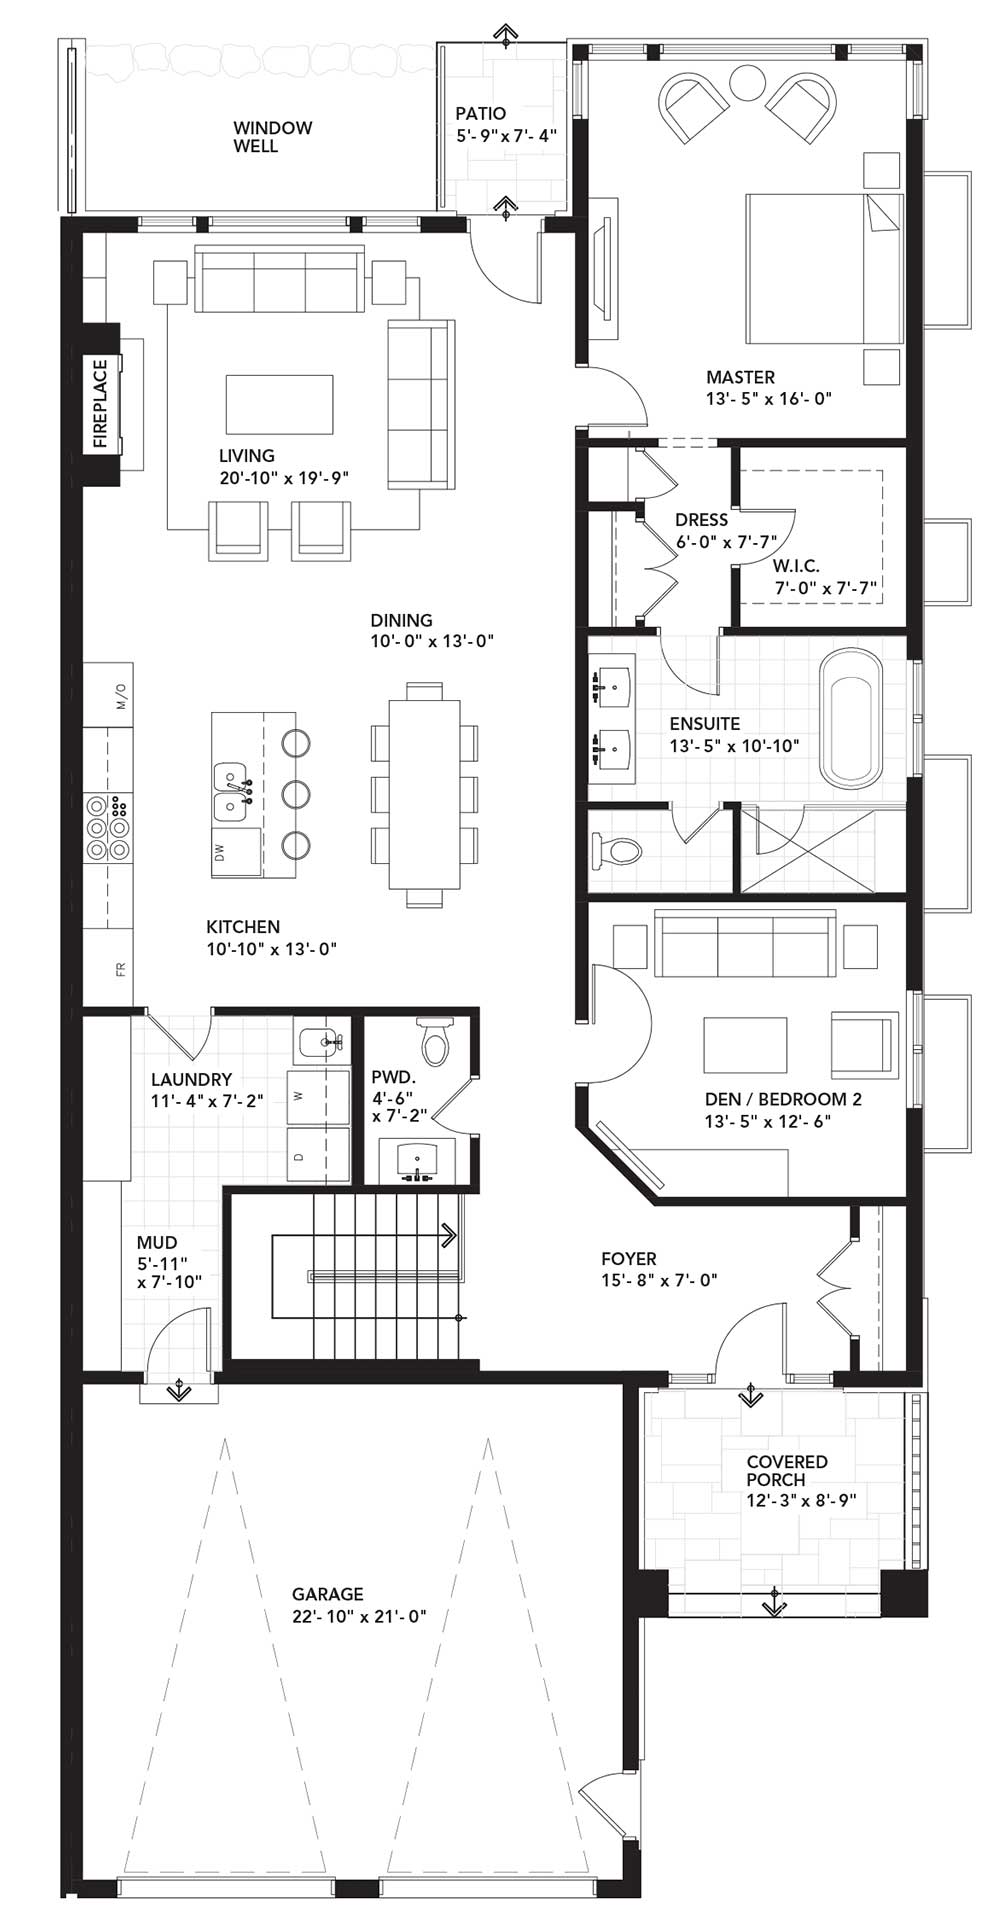 Main Floor Plan - Two Bedroom - Right Unit